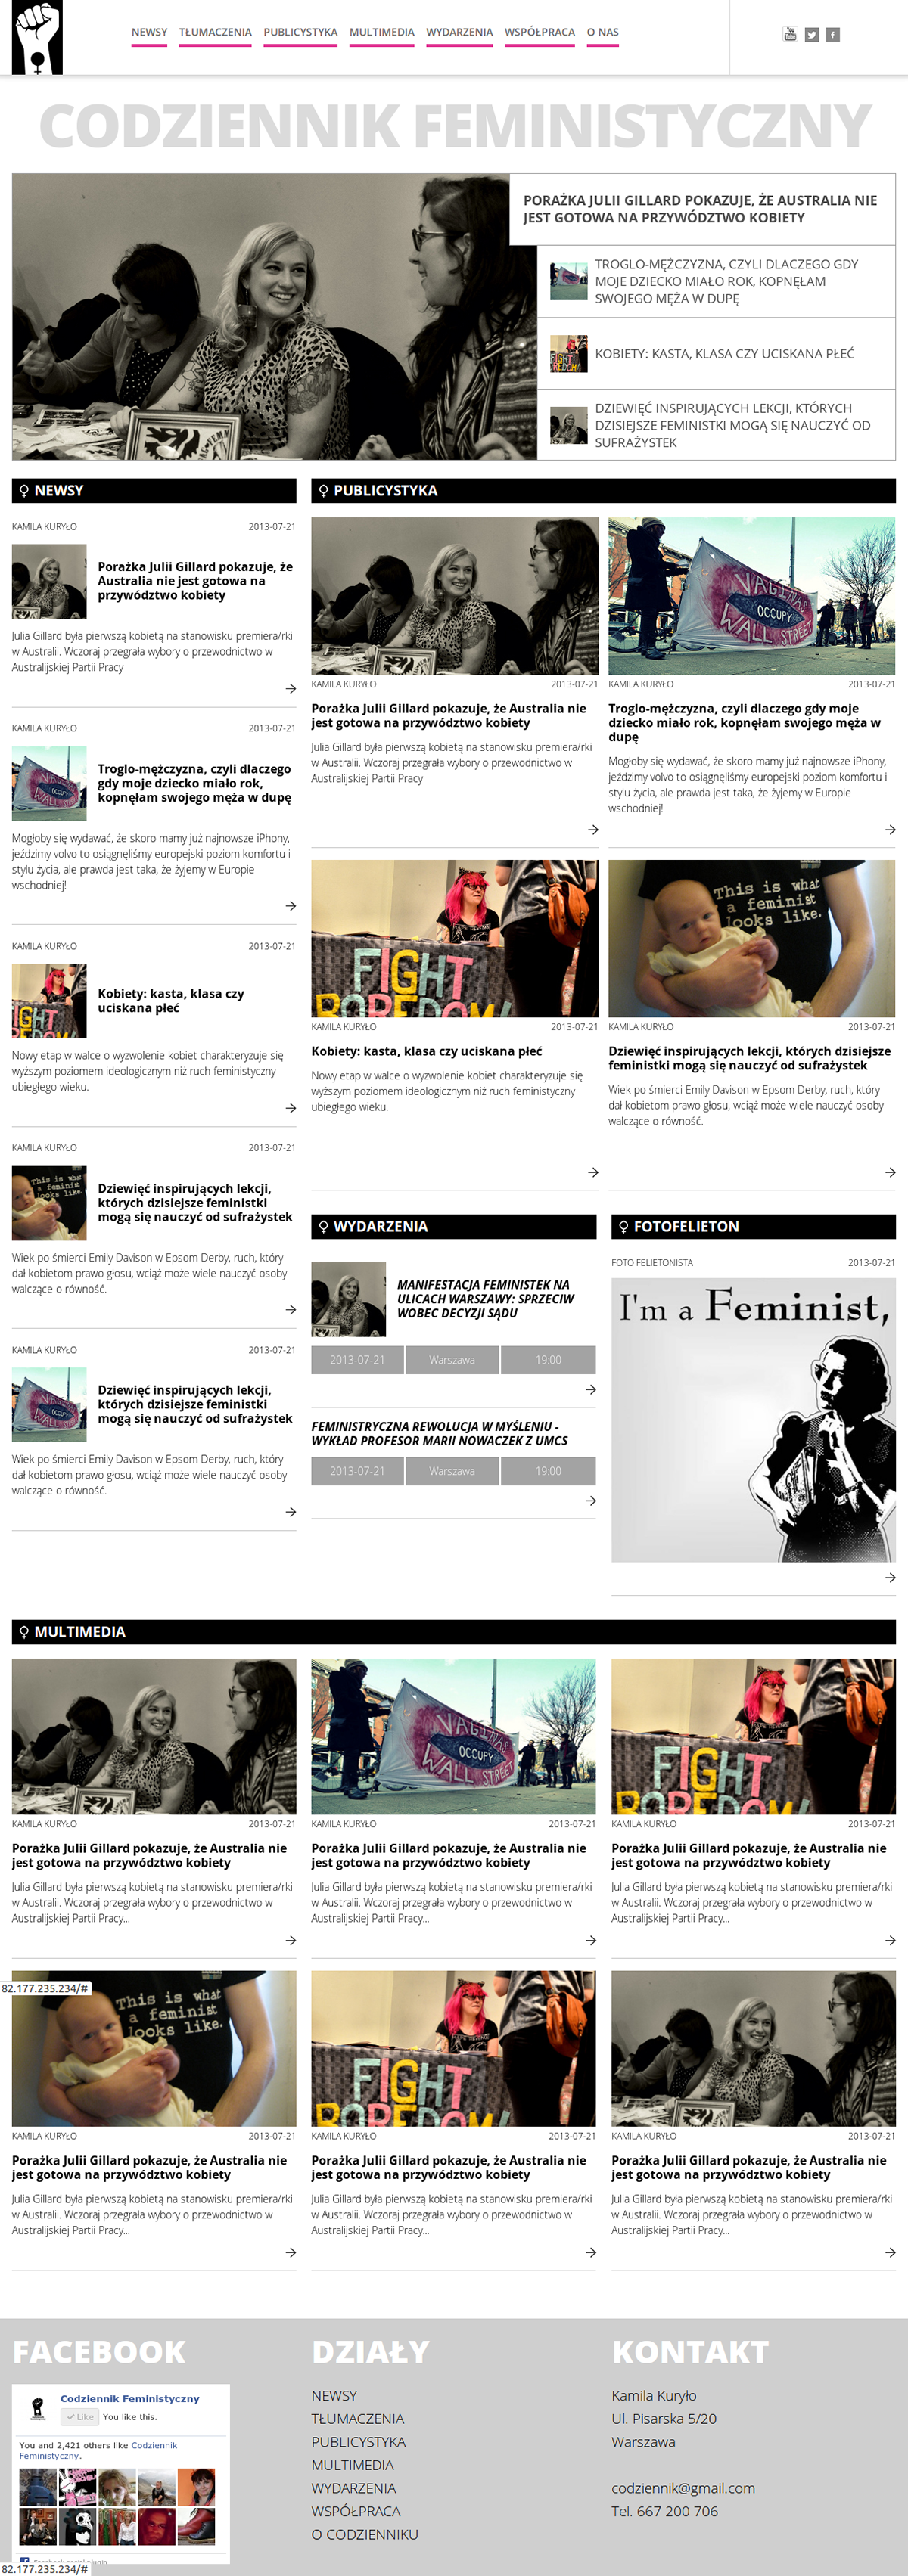 rwd Codziennik Feministyczny magazine layout feminist minimal 2D flat design Responsive